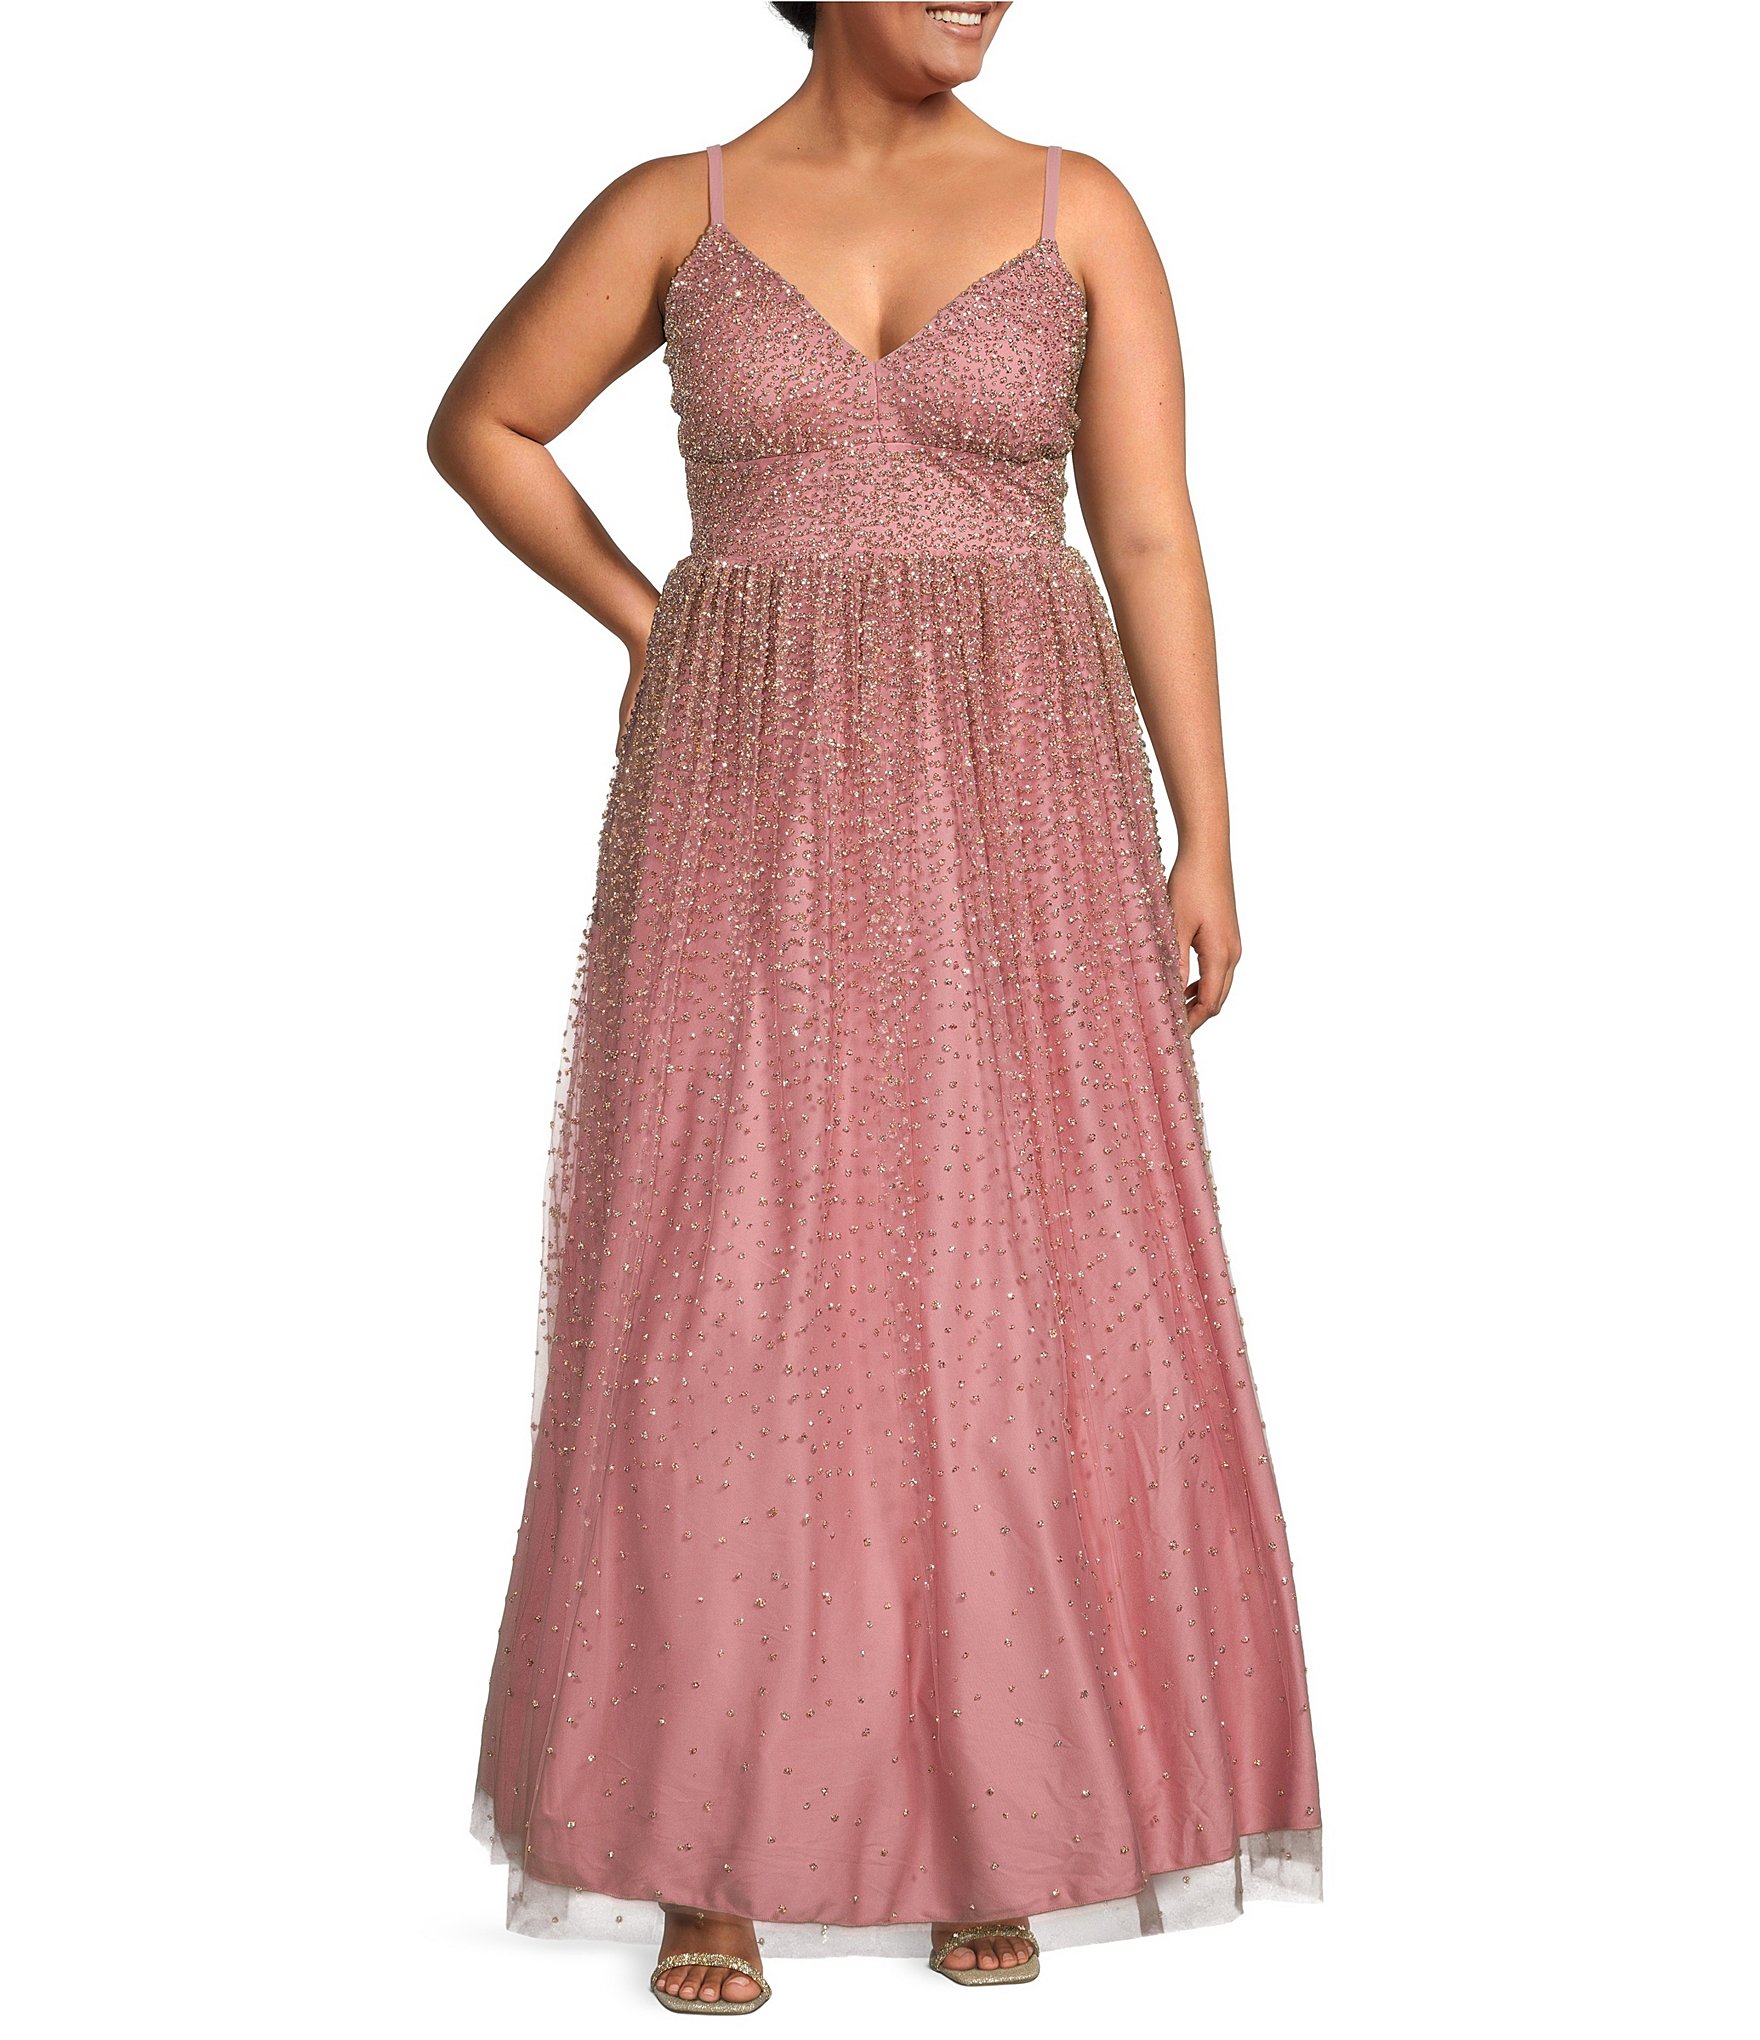 Petite Formal Dresses & Gowns | Dilllard's